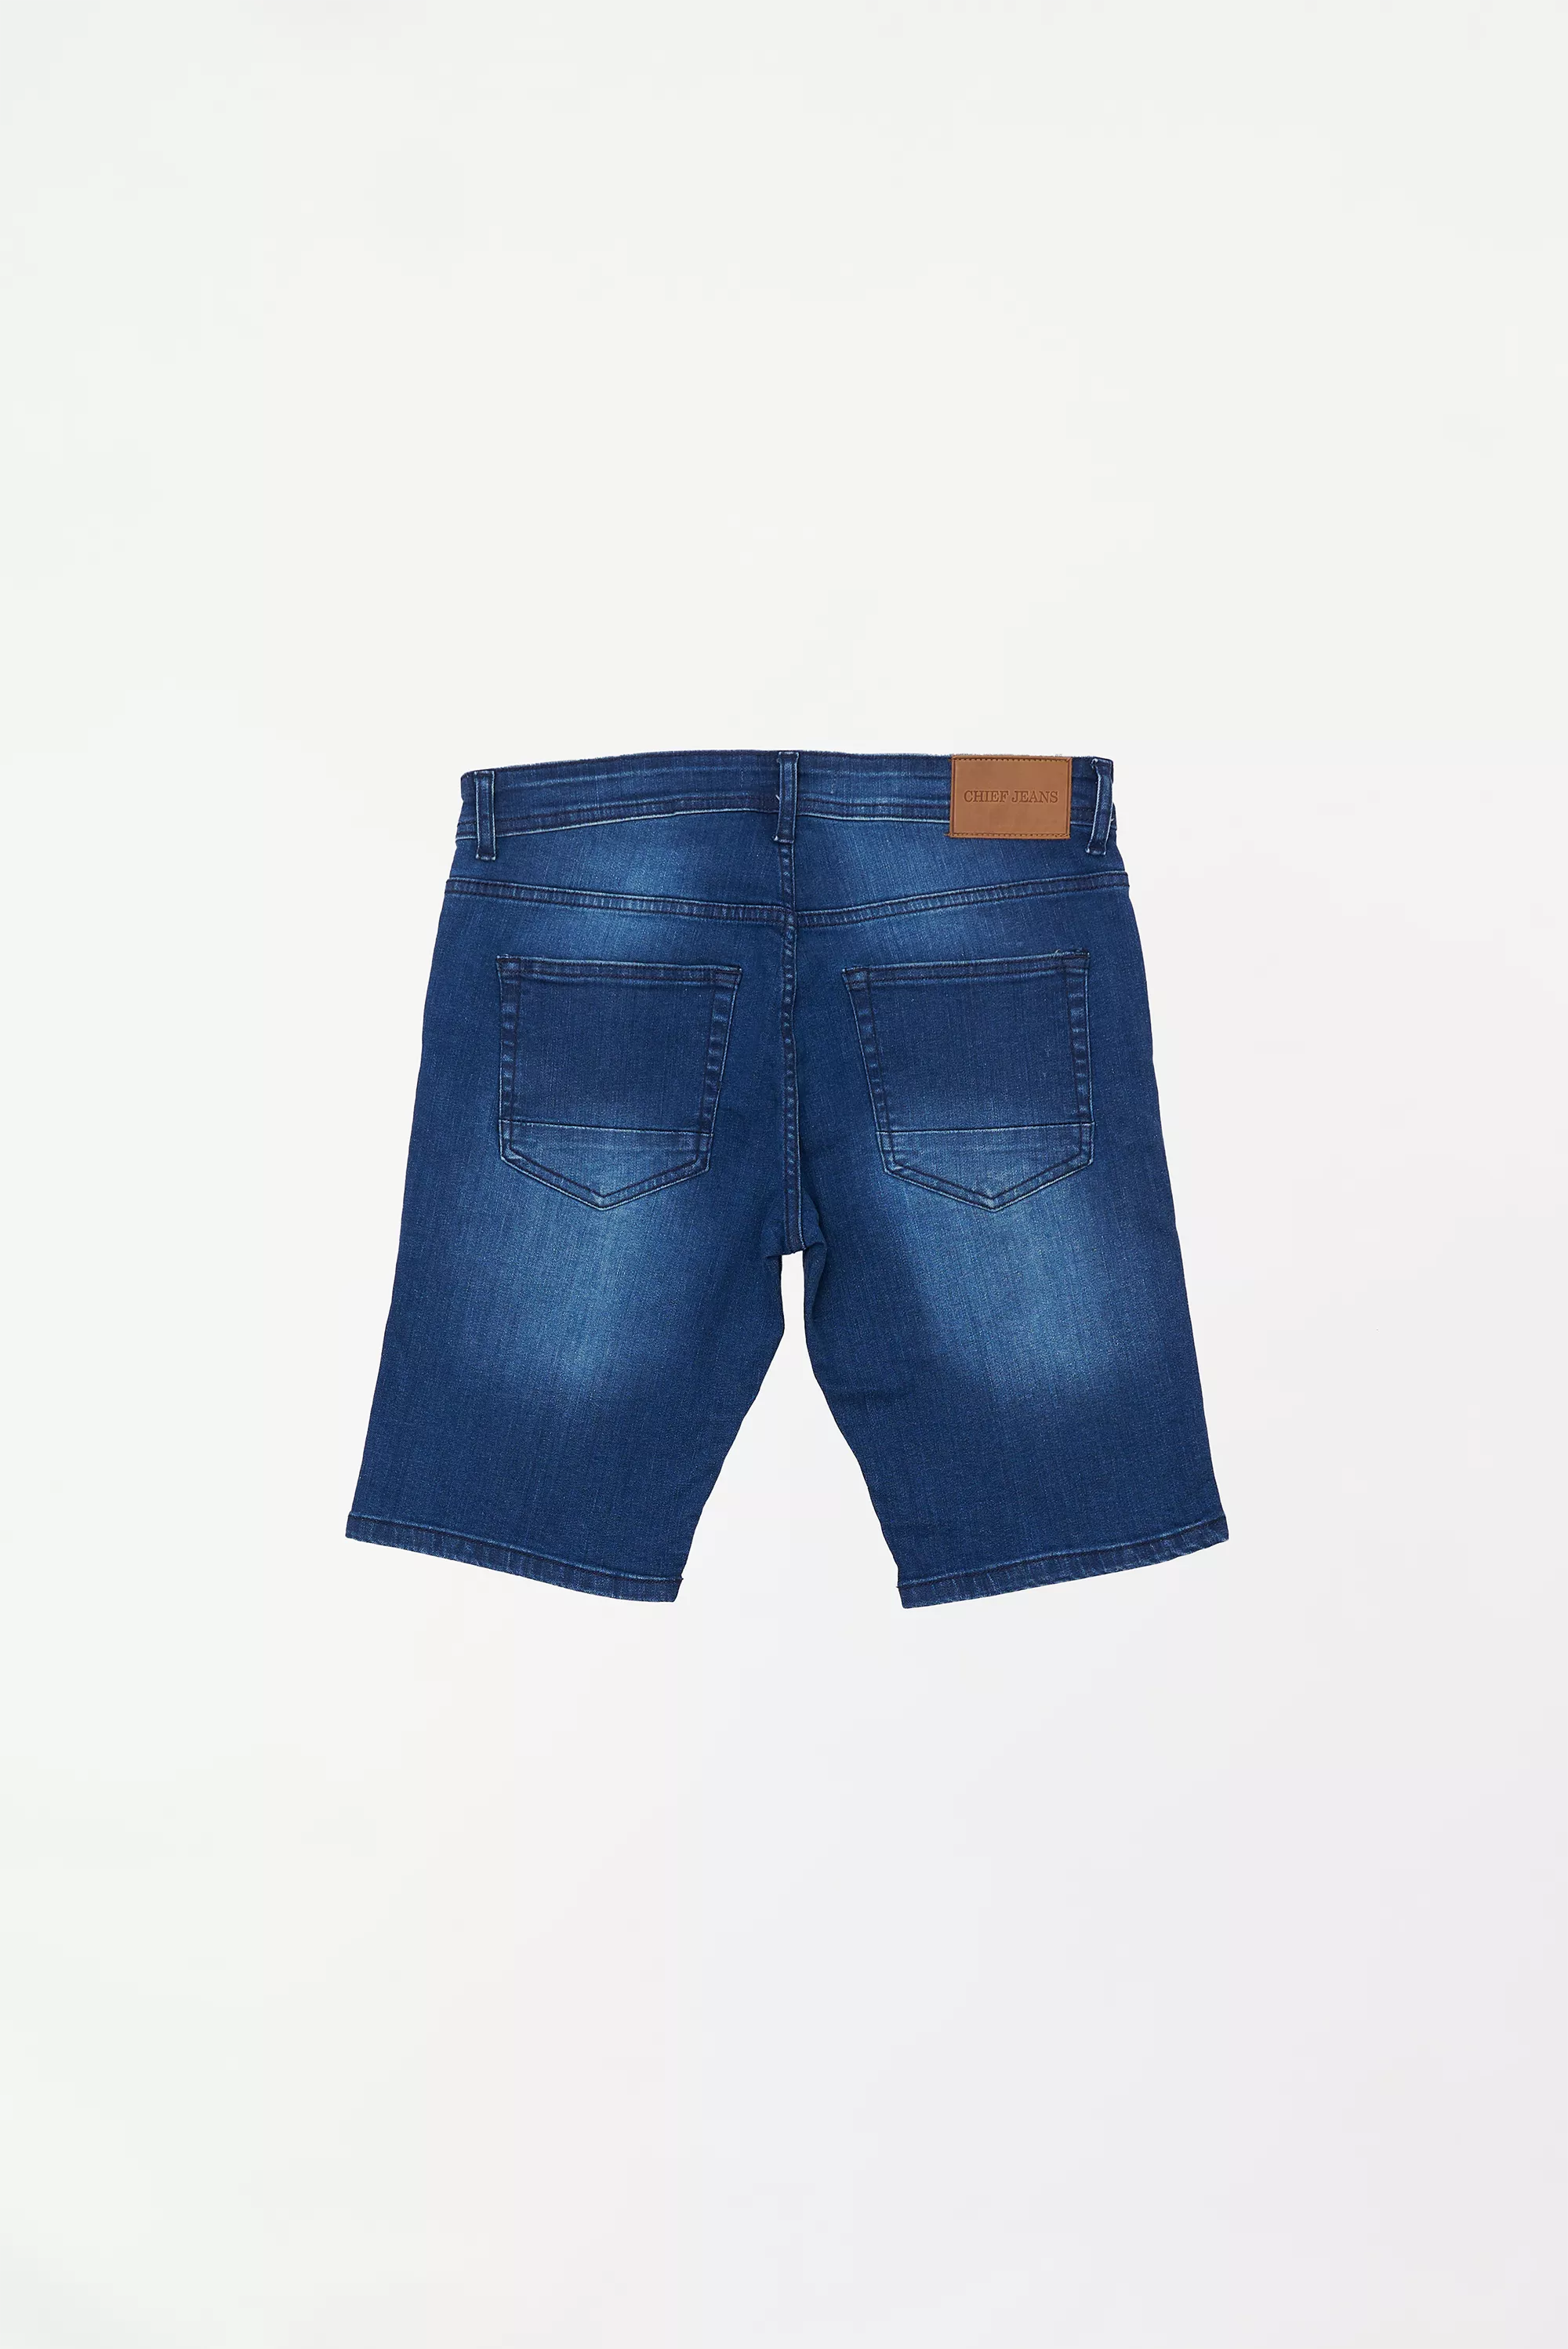 Men's Faded Denim Shorts Blue